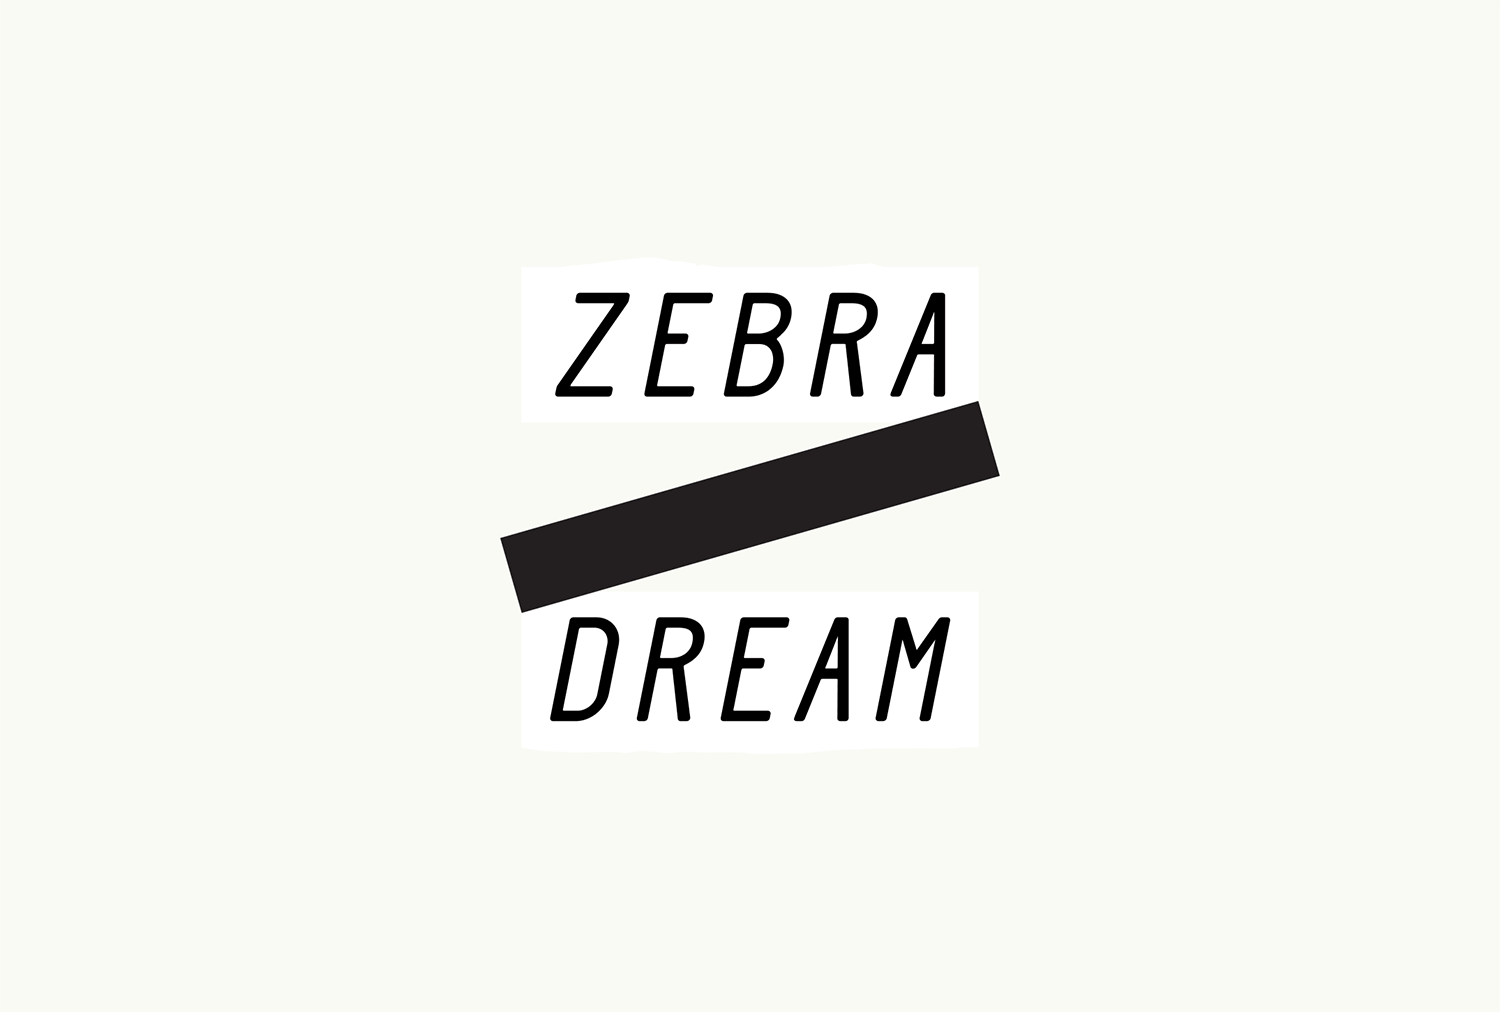 Zebra Company Logo - New Logo Design & Packaging for Zebra Dream by TCYK — BP&O